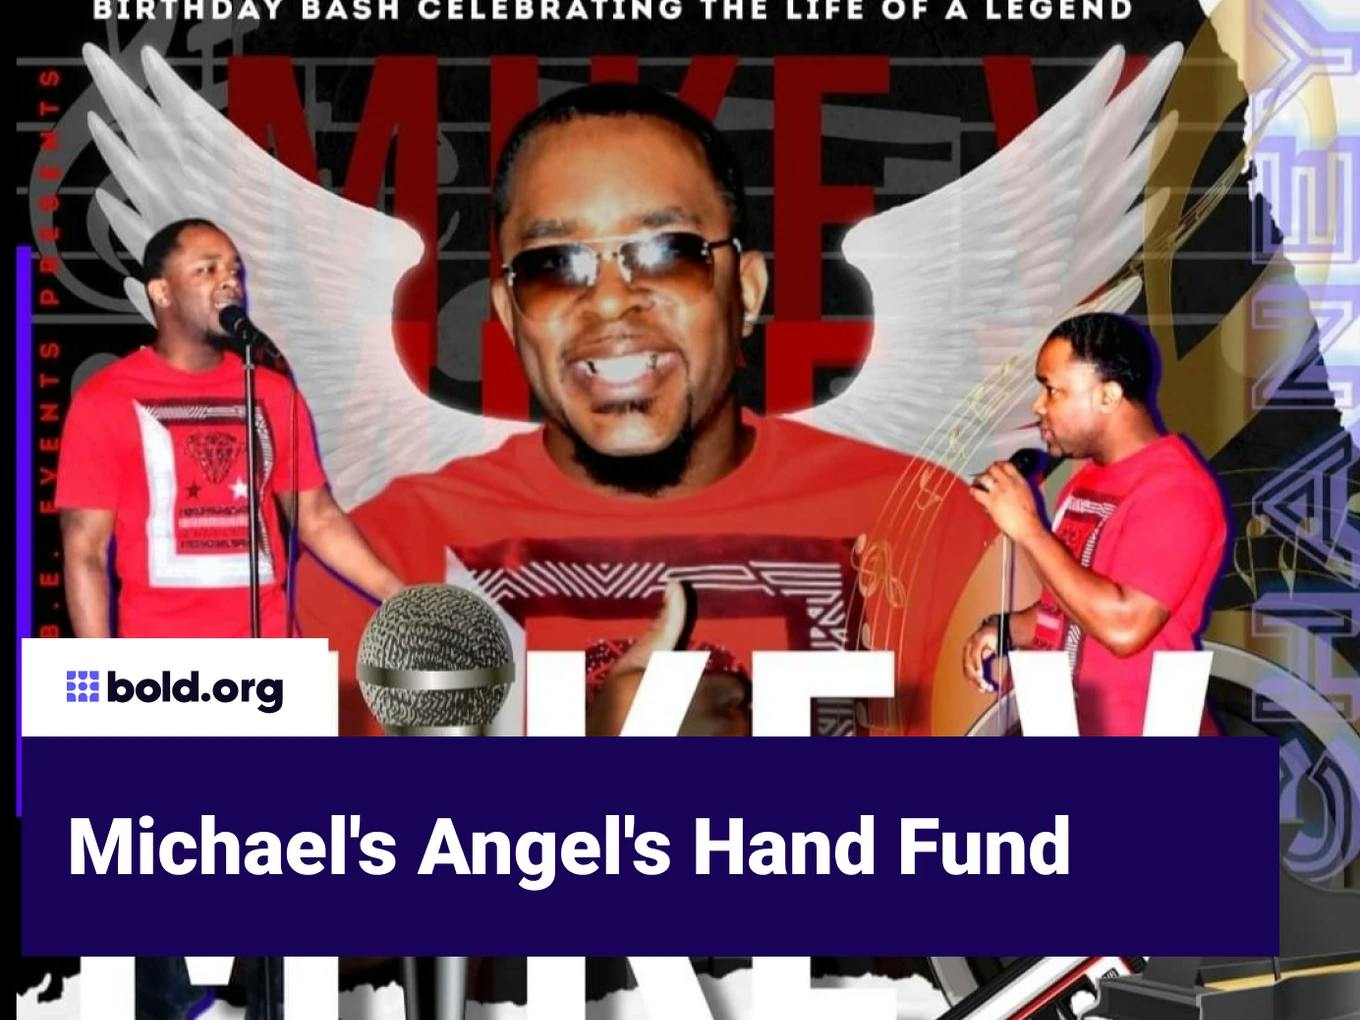 Michael's Angel's Hand Fund